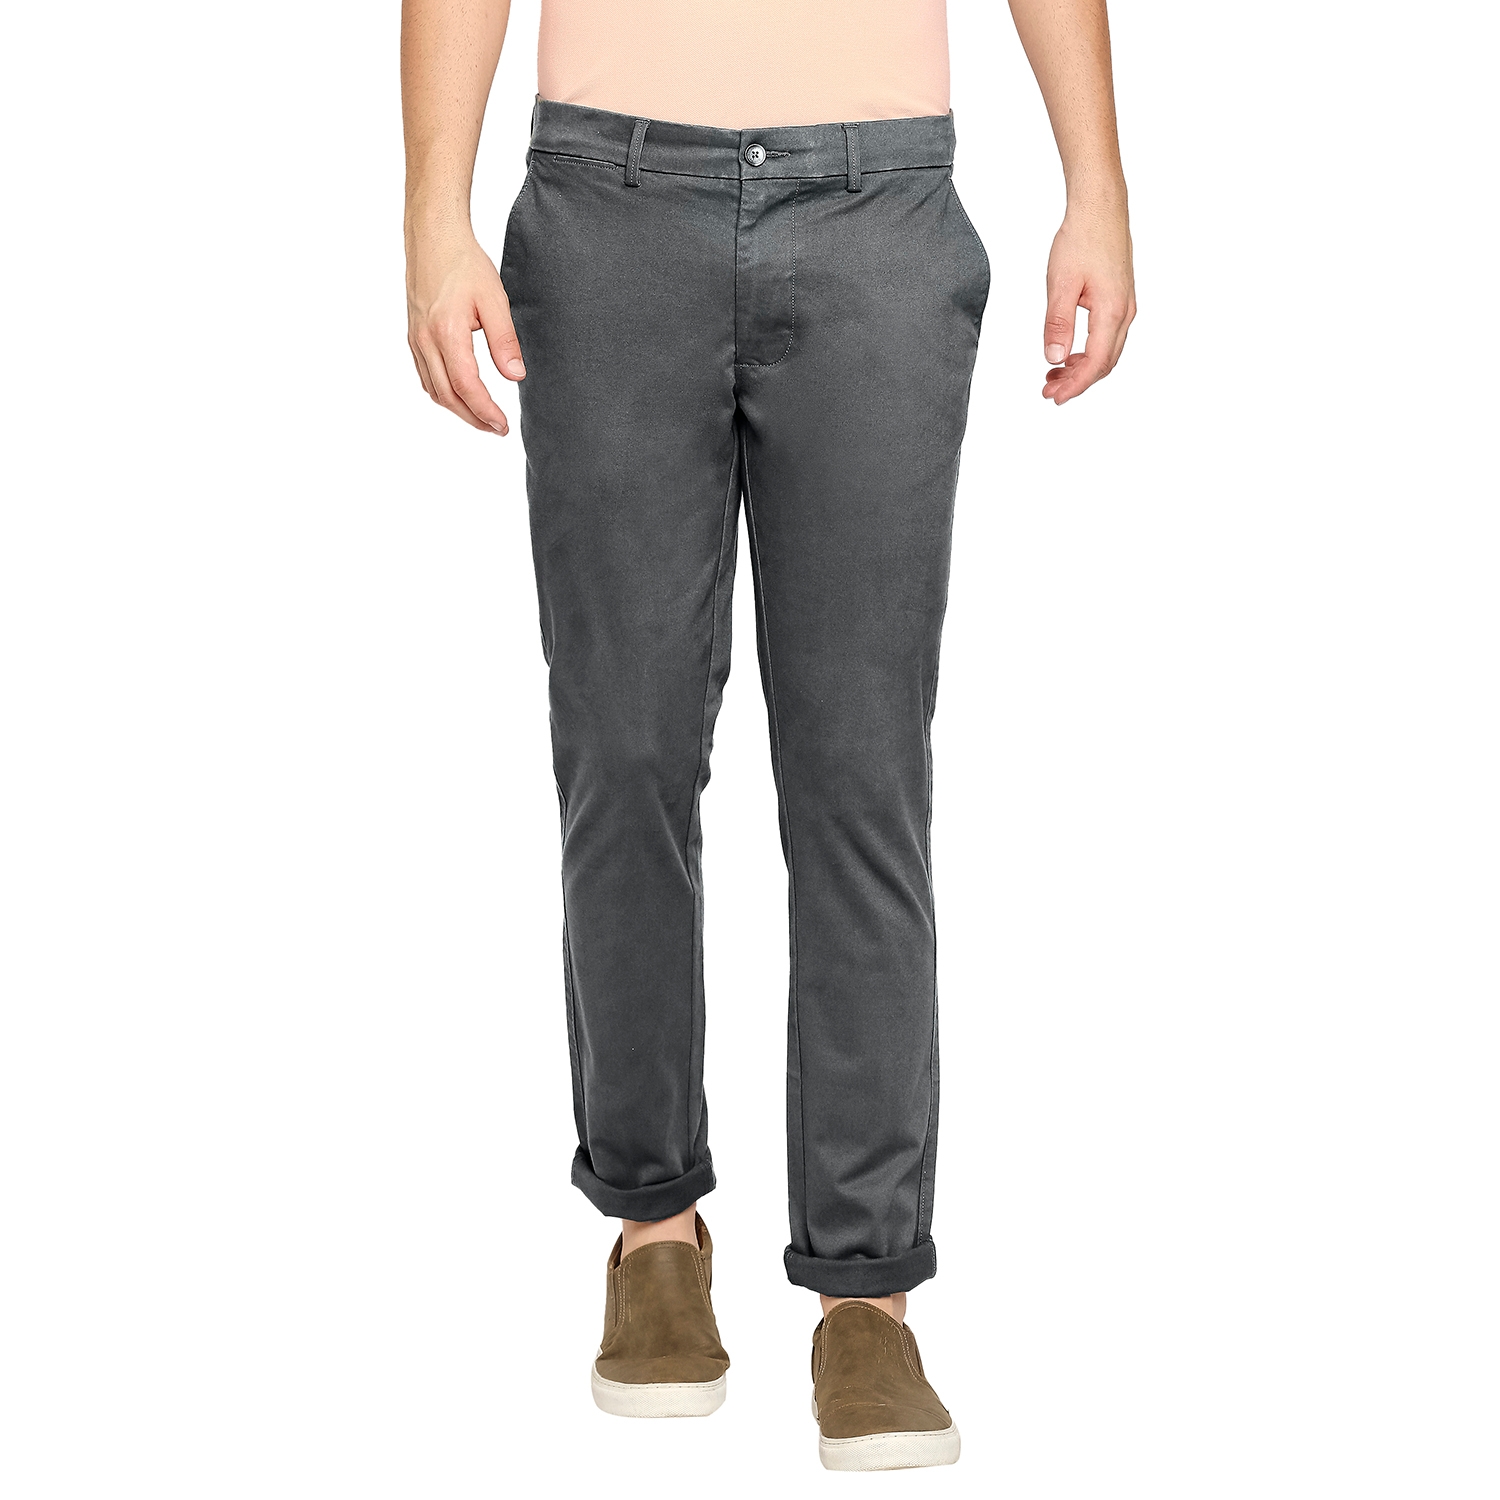 Basics | Basics Tapered Fit Balsam Grey Stretch Trousers